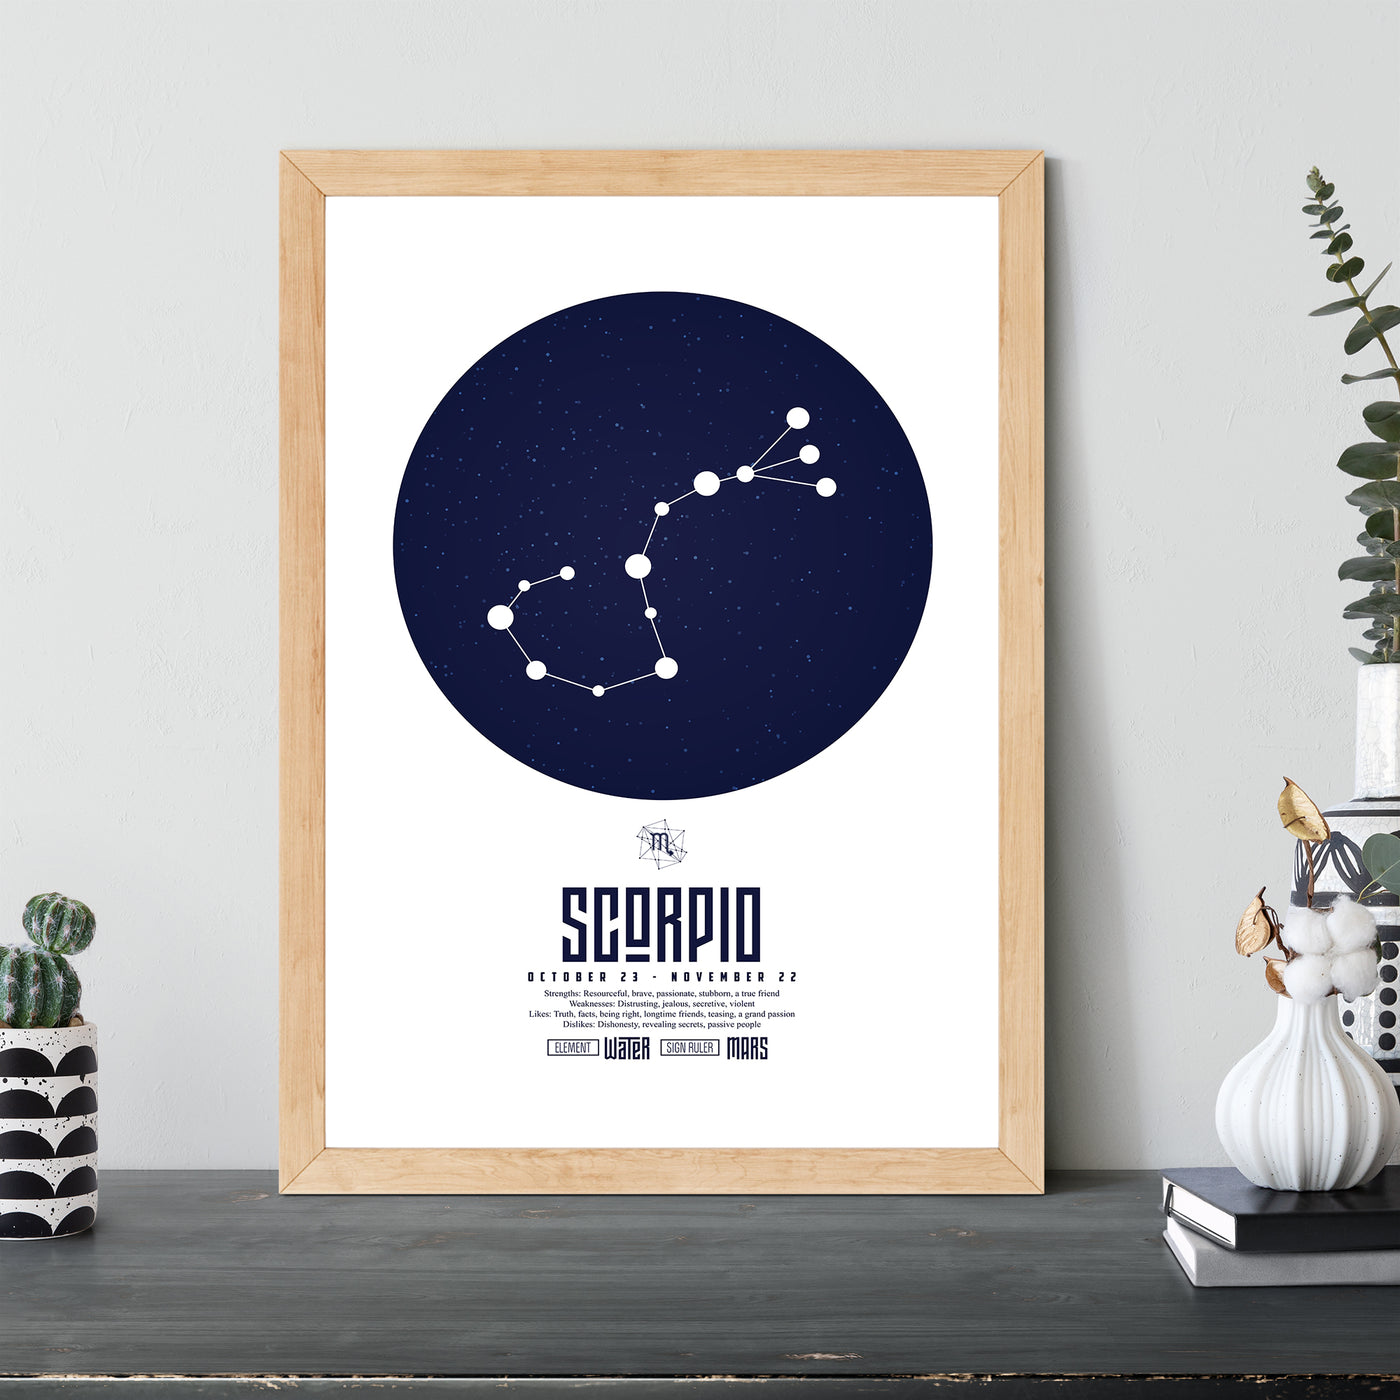 Scorpio Star Sign October 23 - November 22 (Zodiac Sign)